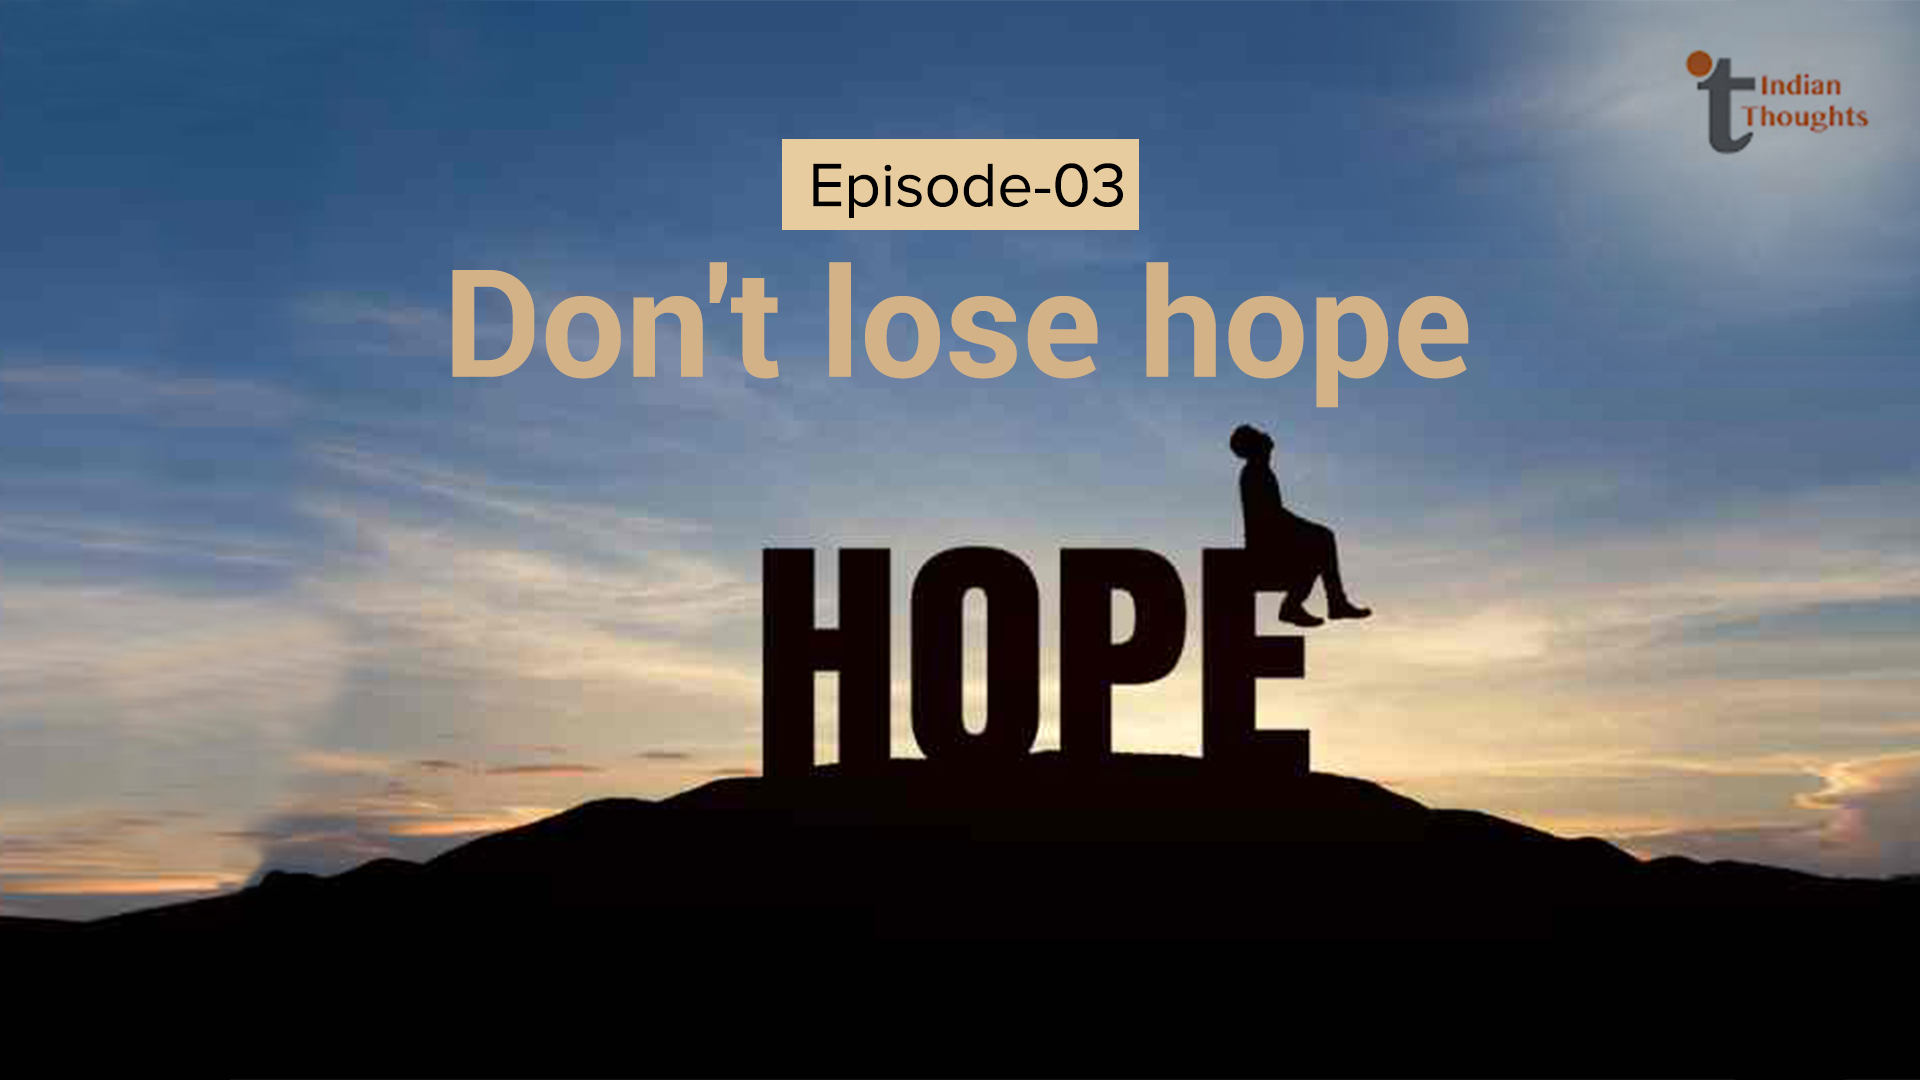 Don’t lose hope